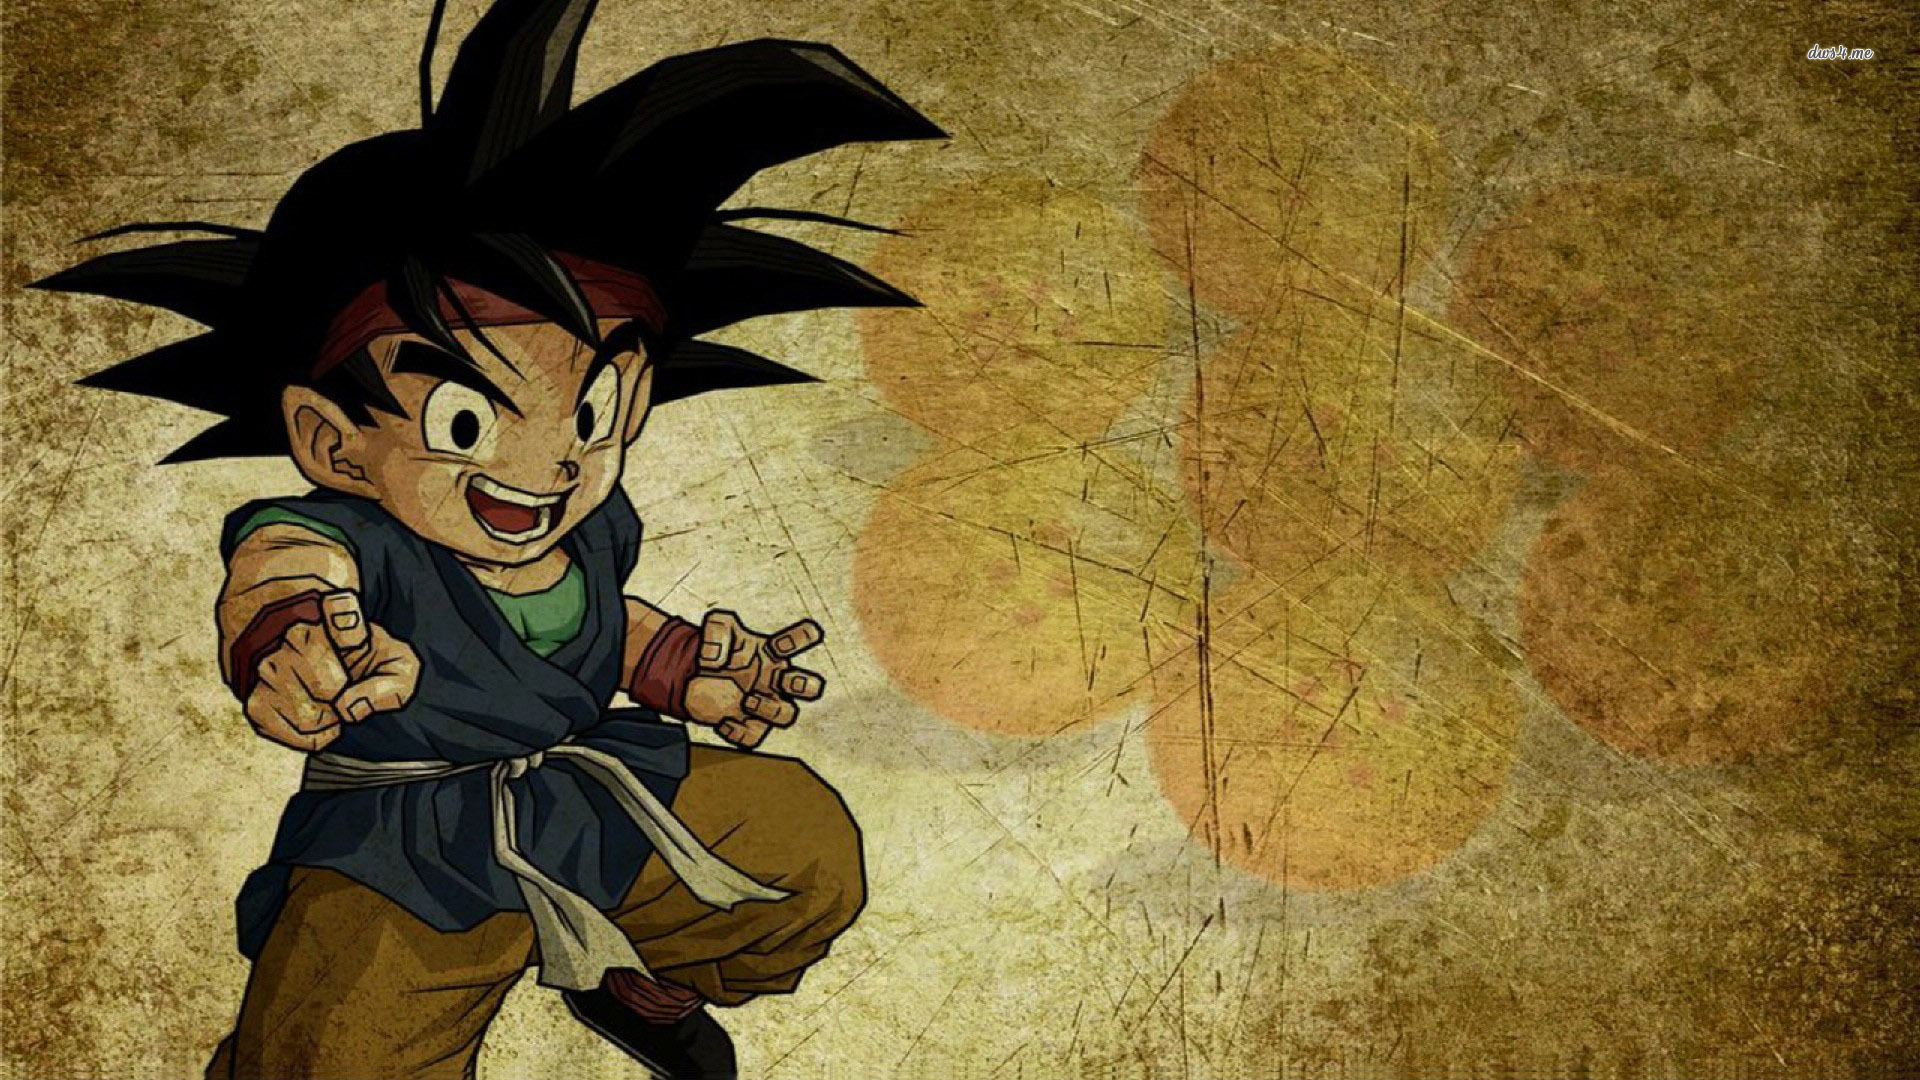 40 Best Goku Wallpaper hd for PC: Dragon Ball Z